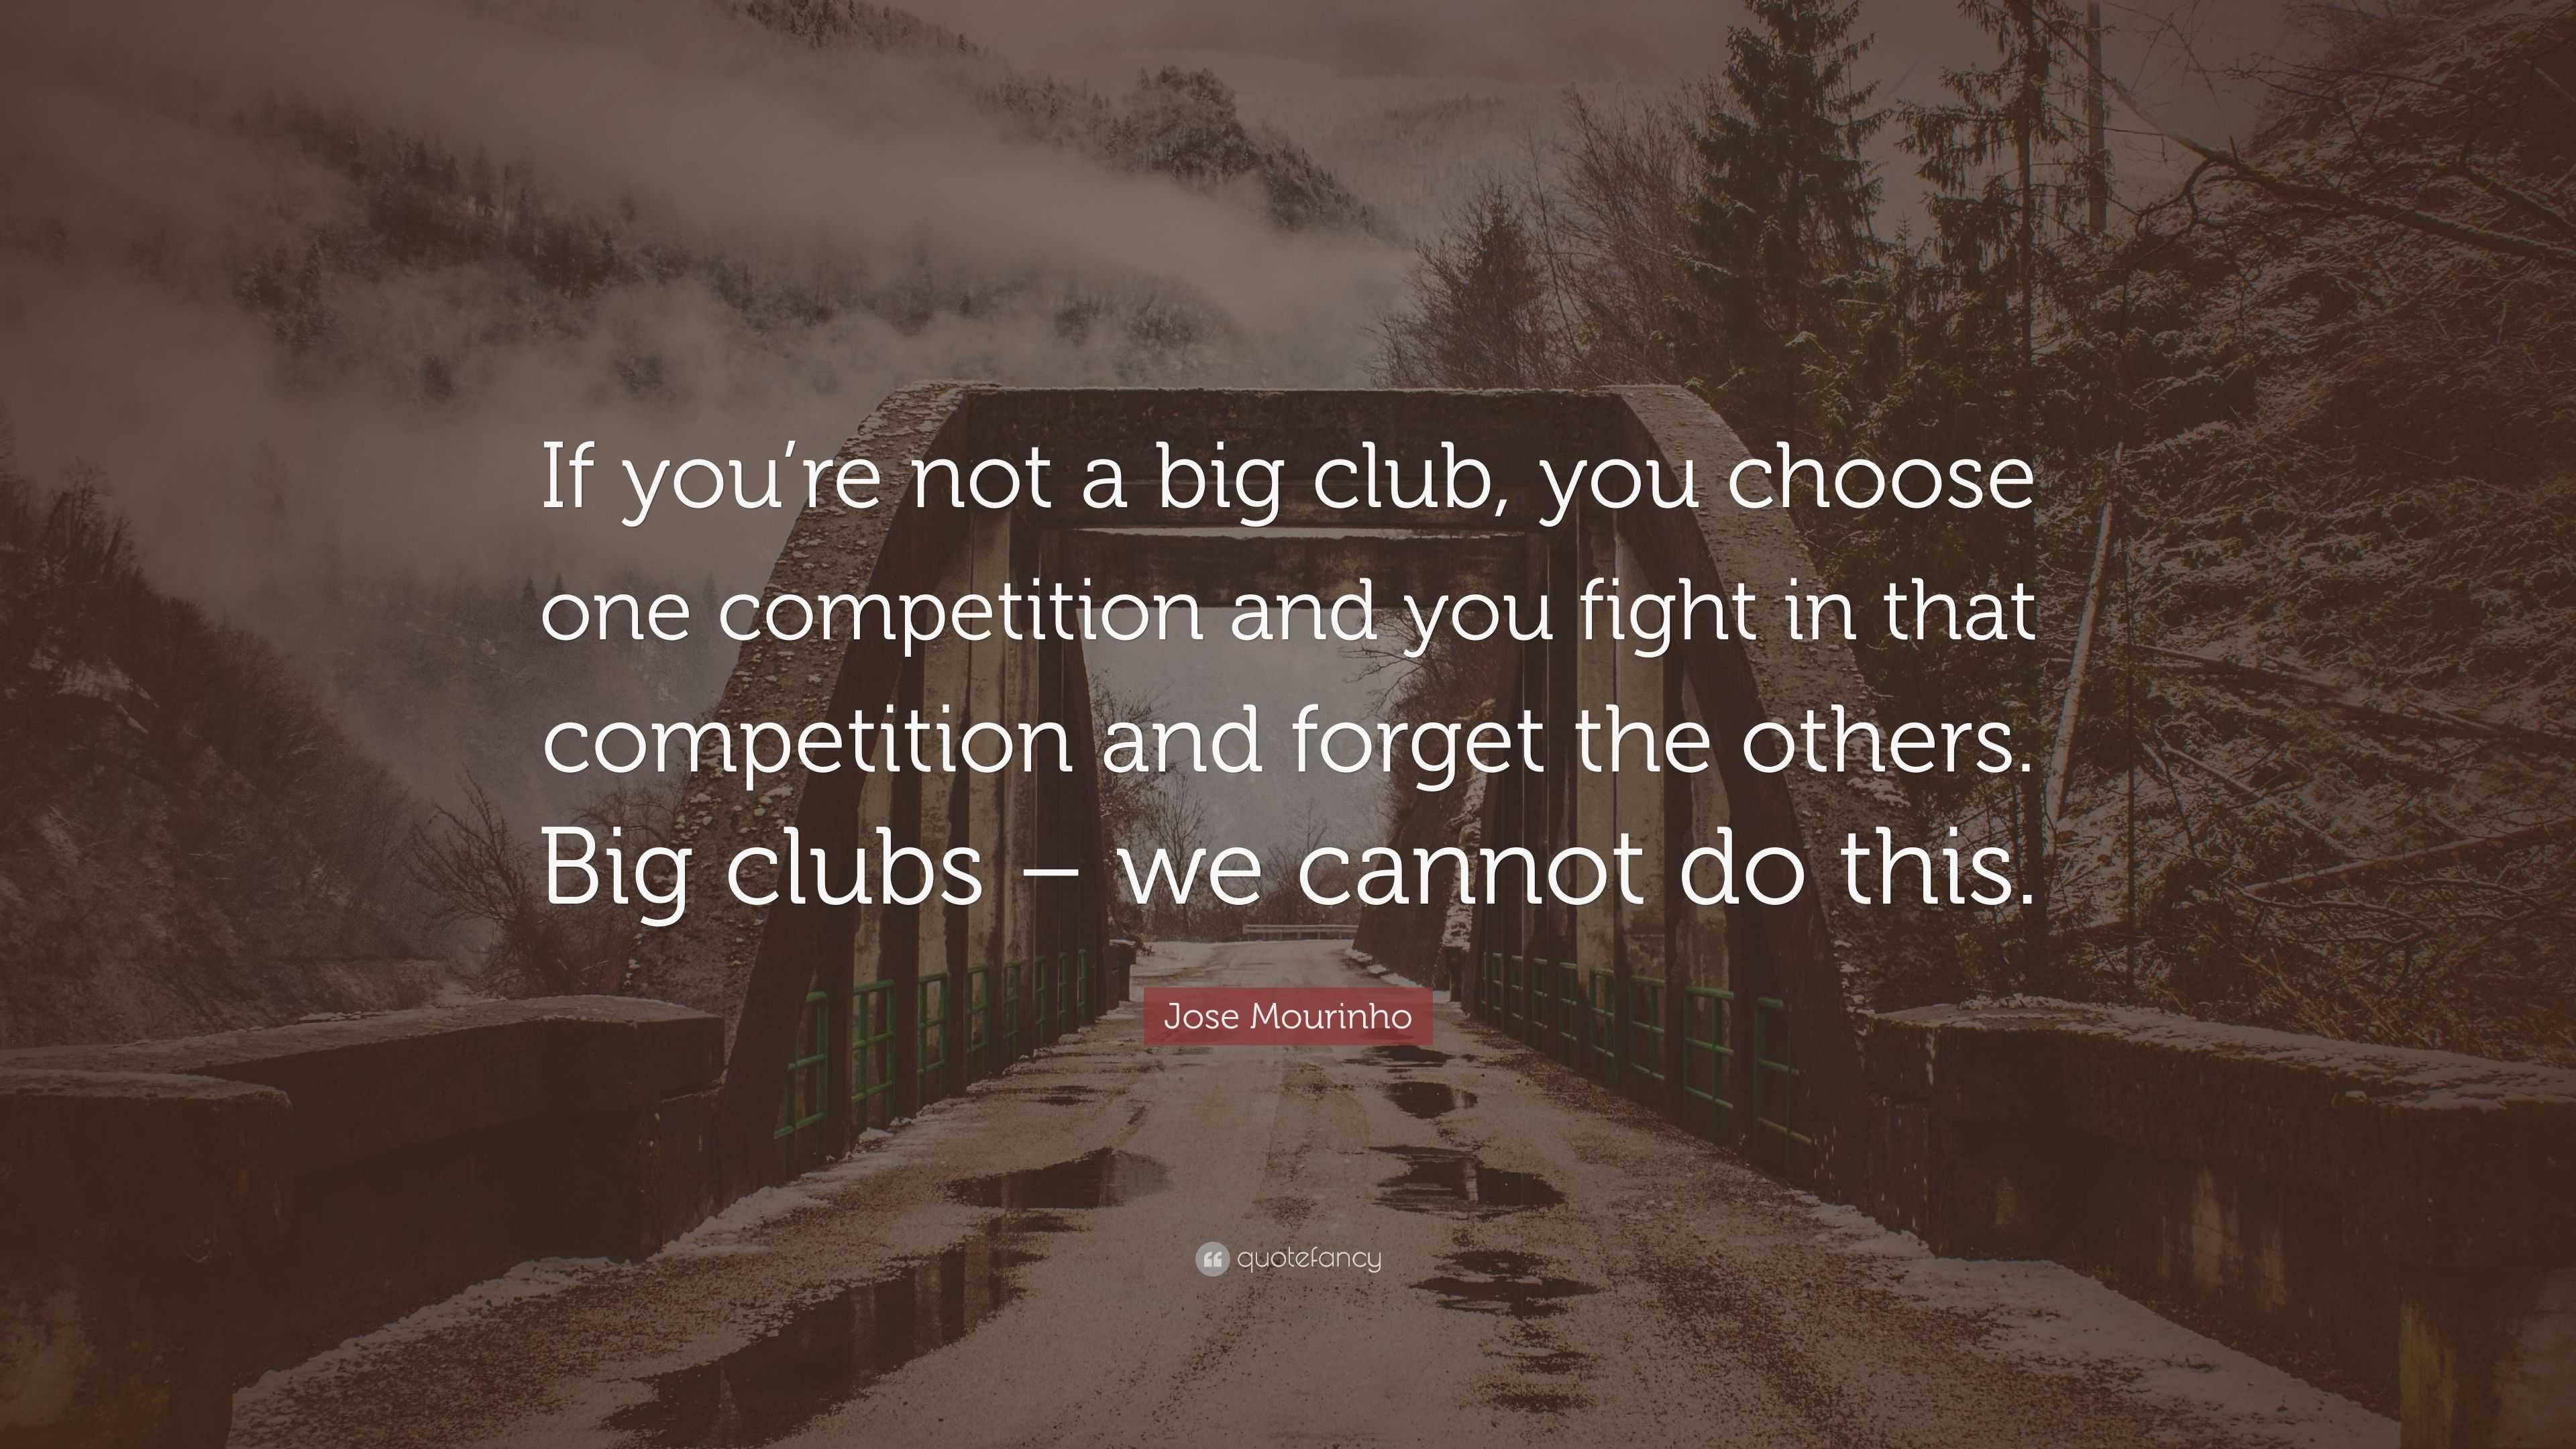 Jose Mourinho Quote: “If you’re not a big club, you choose one ...